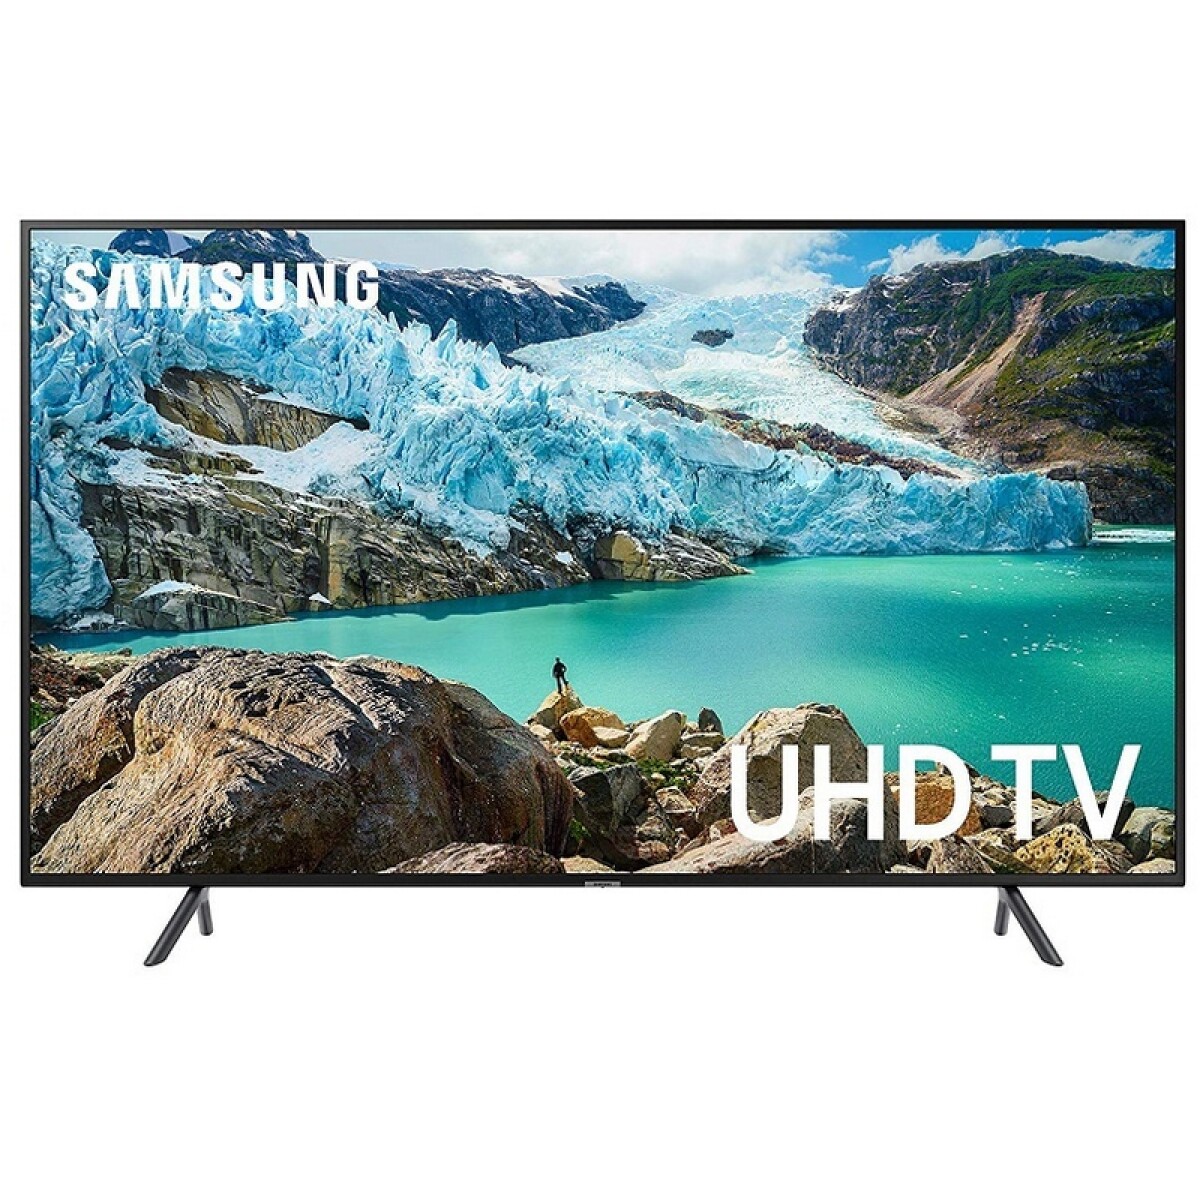 TV SAMSUNG - 55" LED SMART TV UHD 4K 